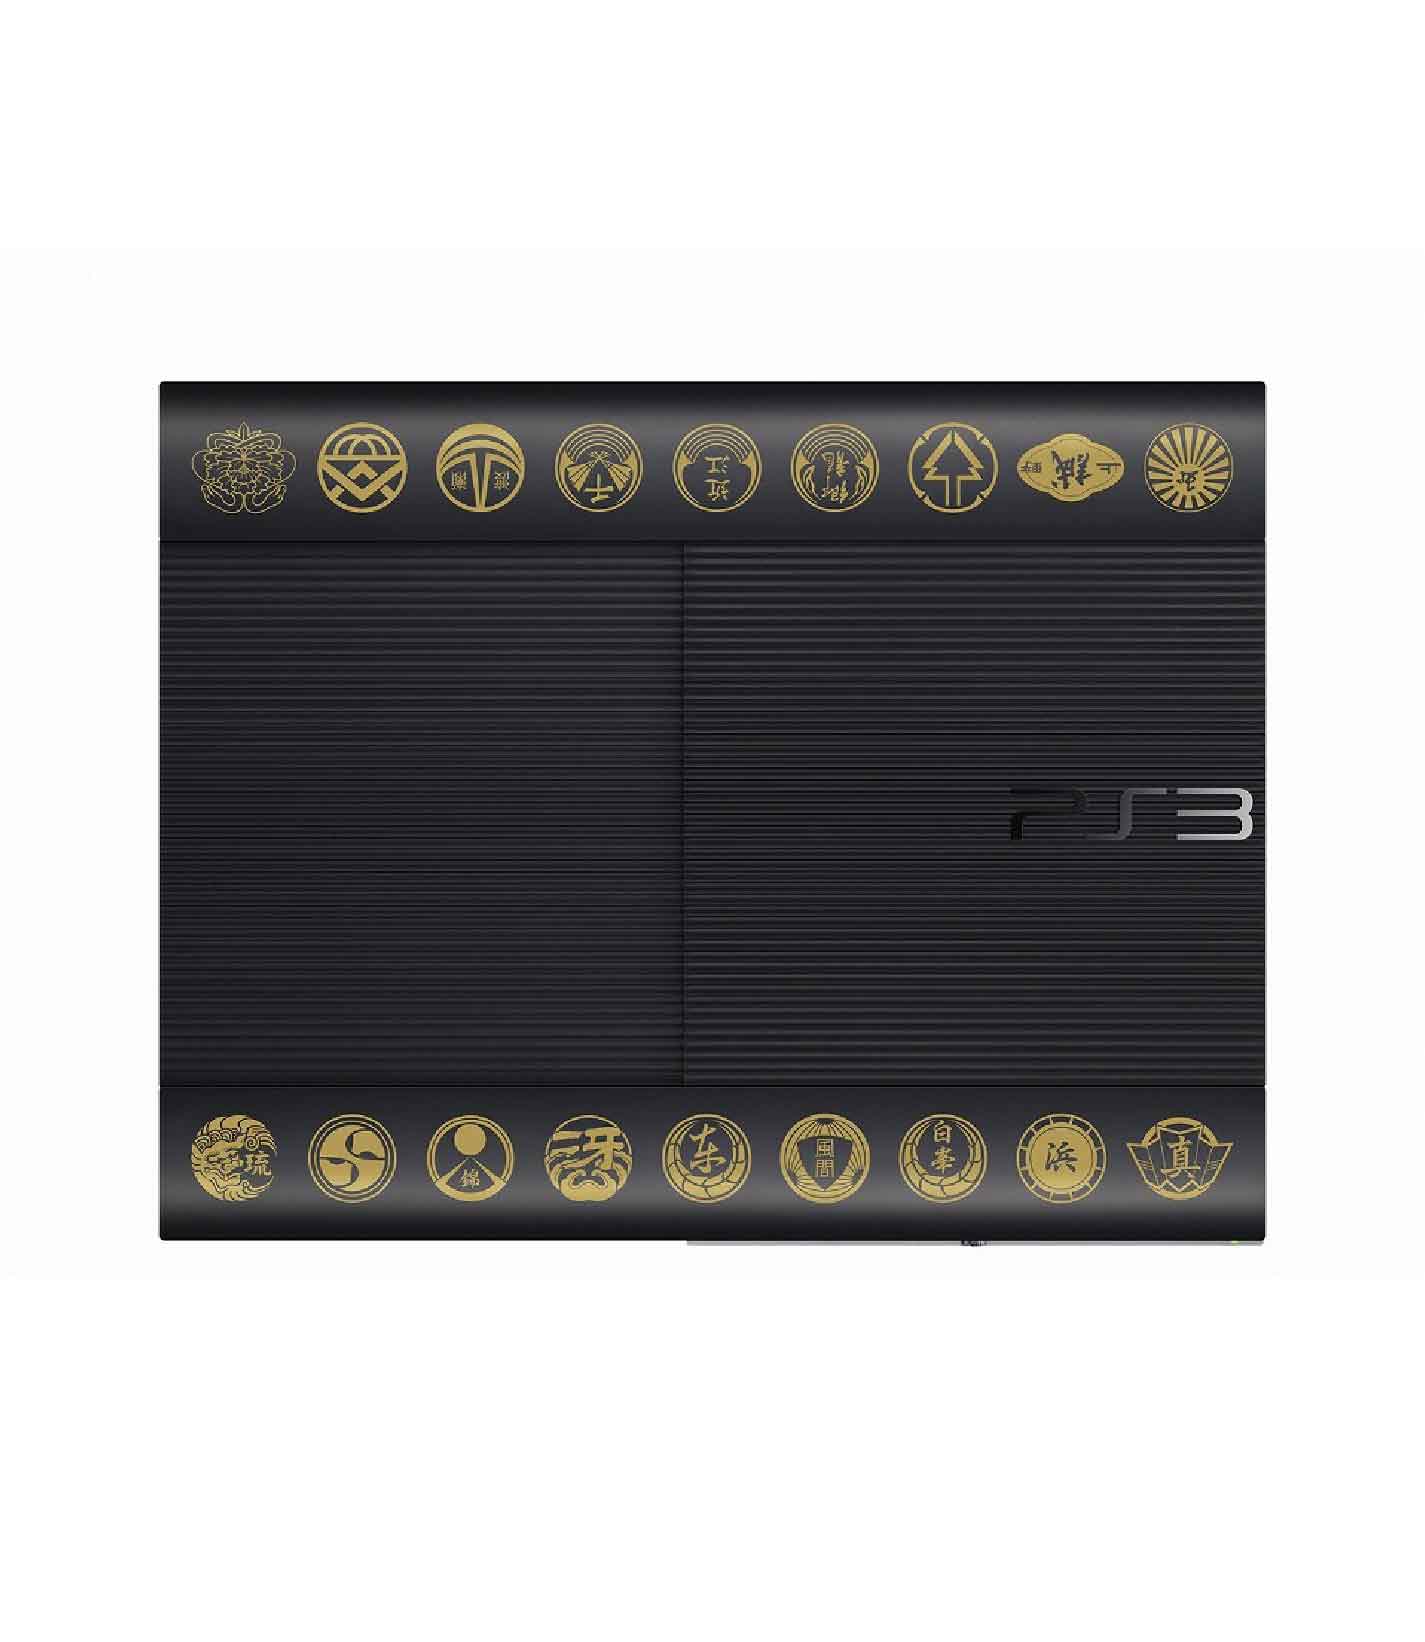 Sony Playstation 3 (PS3) Yakuza 5 Emblem LIMITED EDITION Bundle 